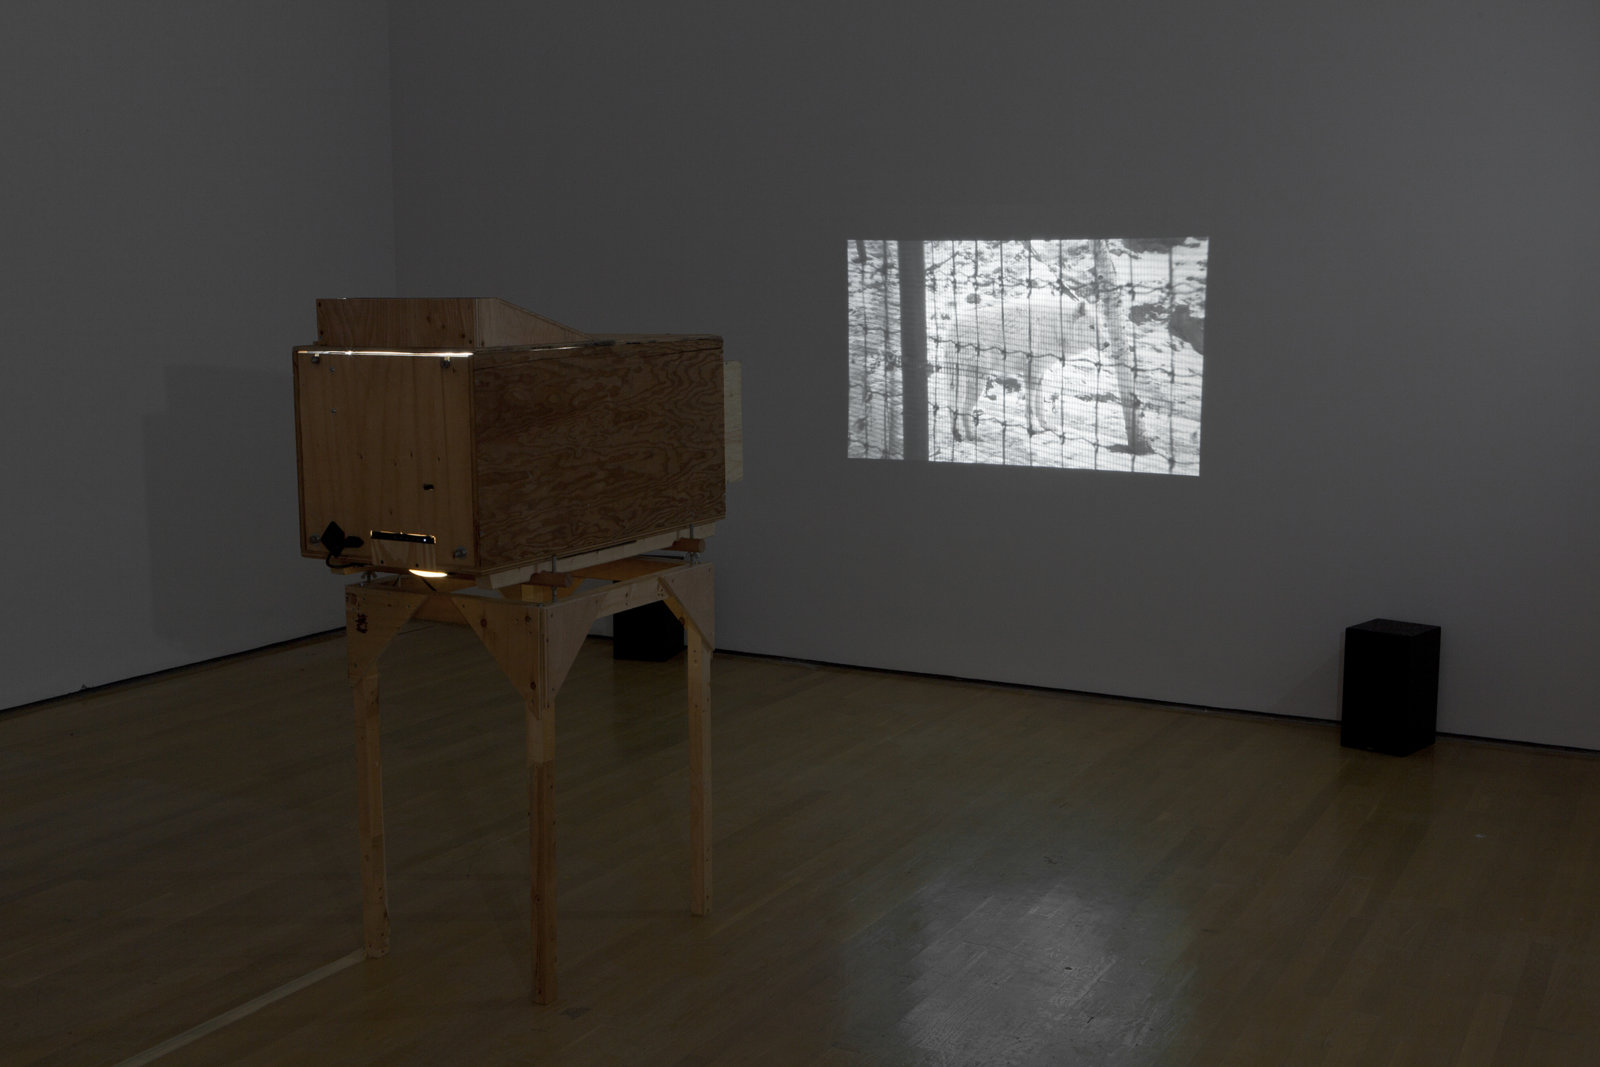 Kevin Schmidt, Sad Wolf (detail), 2006, custom-made HD video projector, 48 x 24 x 48 in. (122 x 61 x 122 cm), HD video, 4 minutes, 11 seconds. Installation view, Zoo,	Musée	d’art	contemporain de	Montréal, 2012